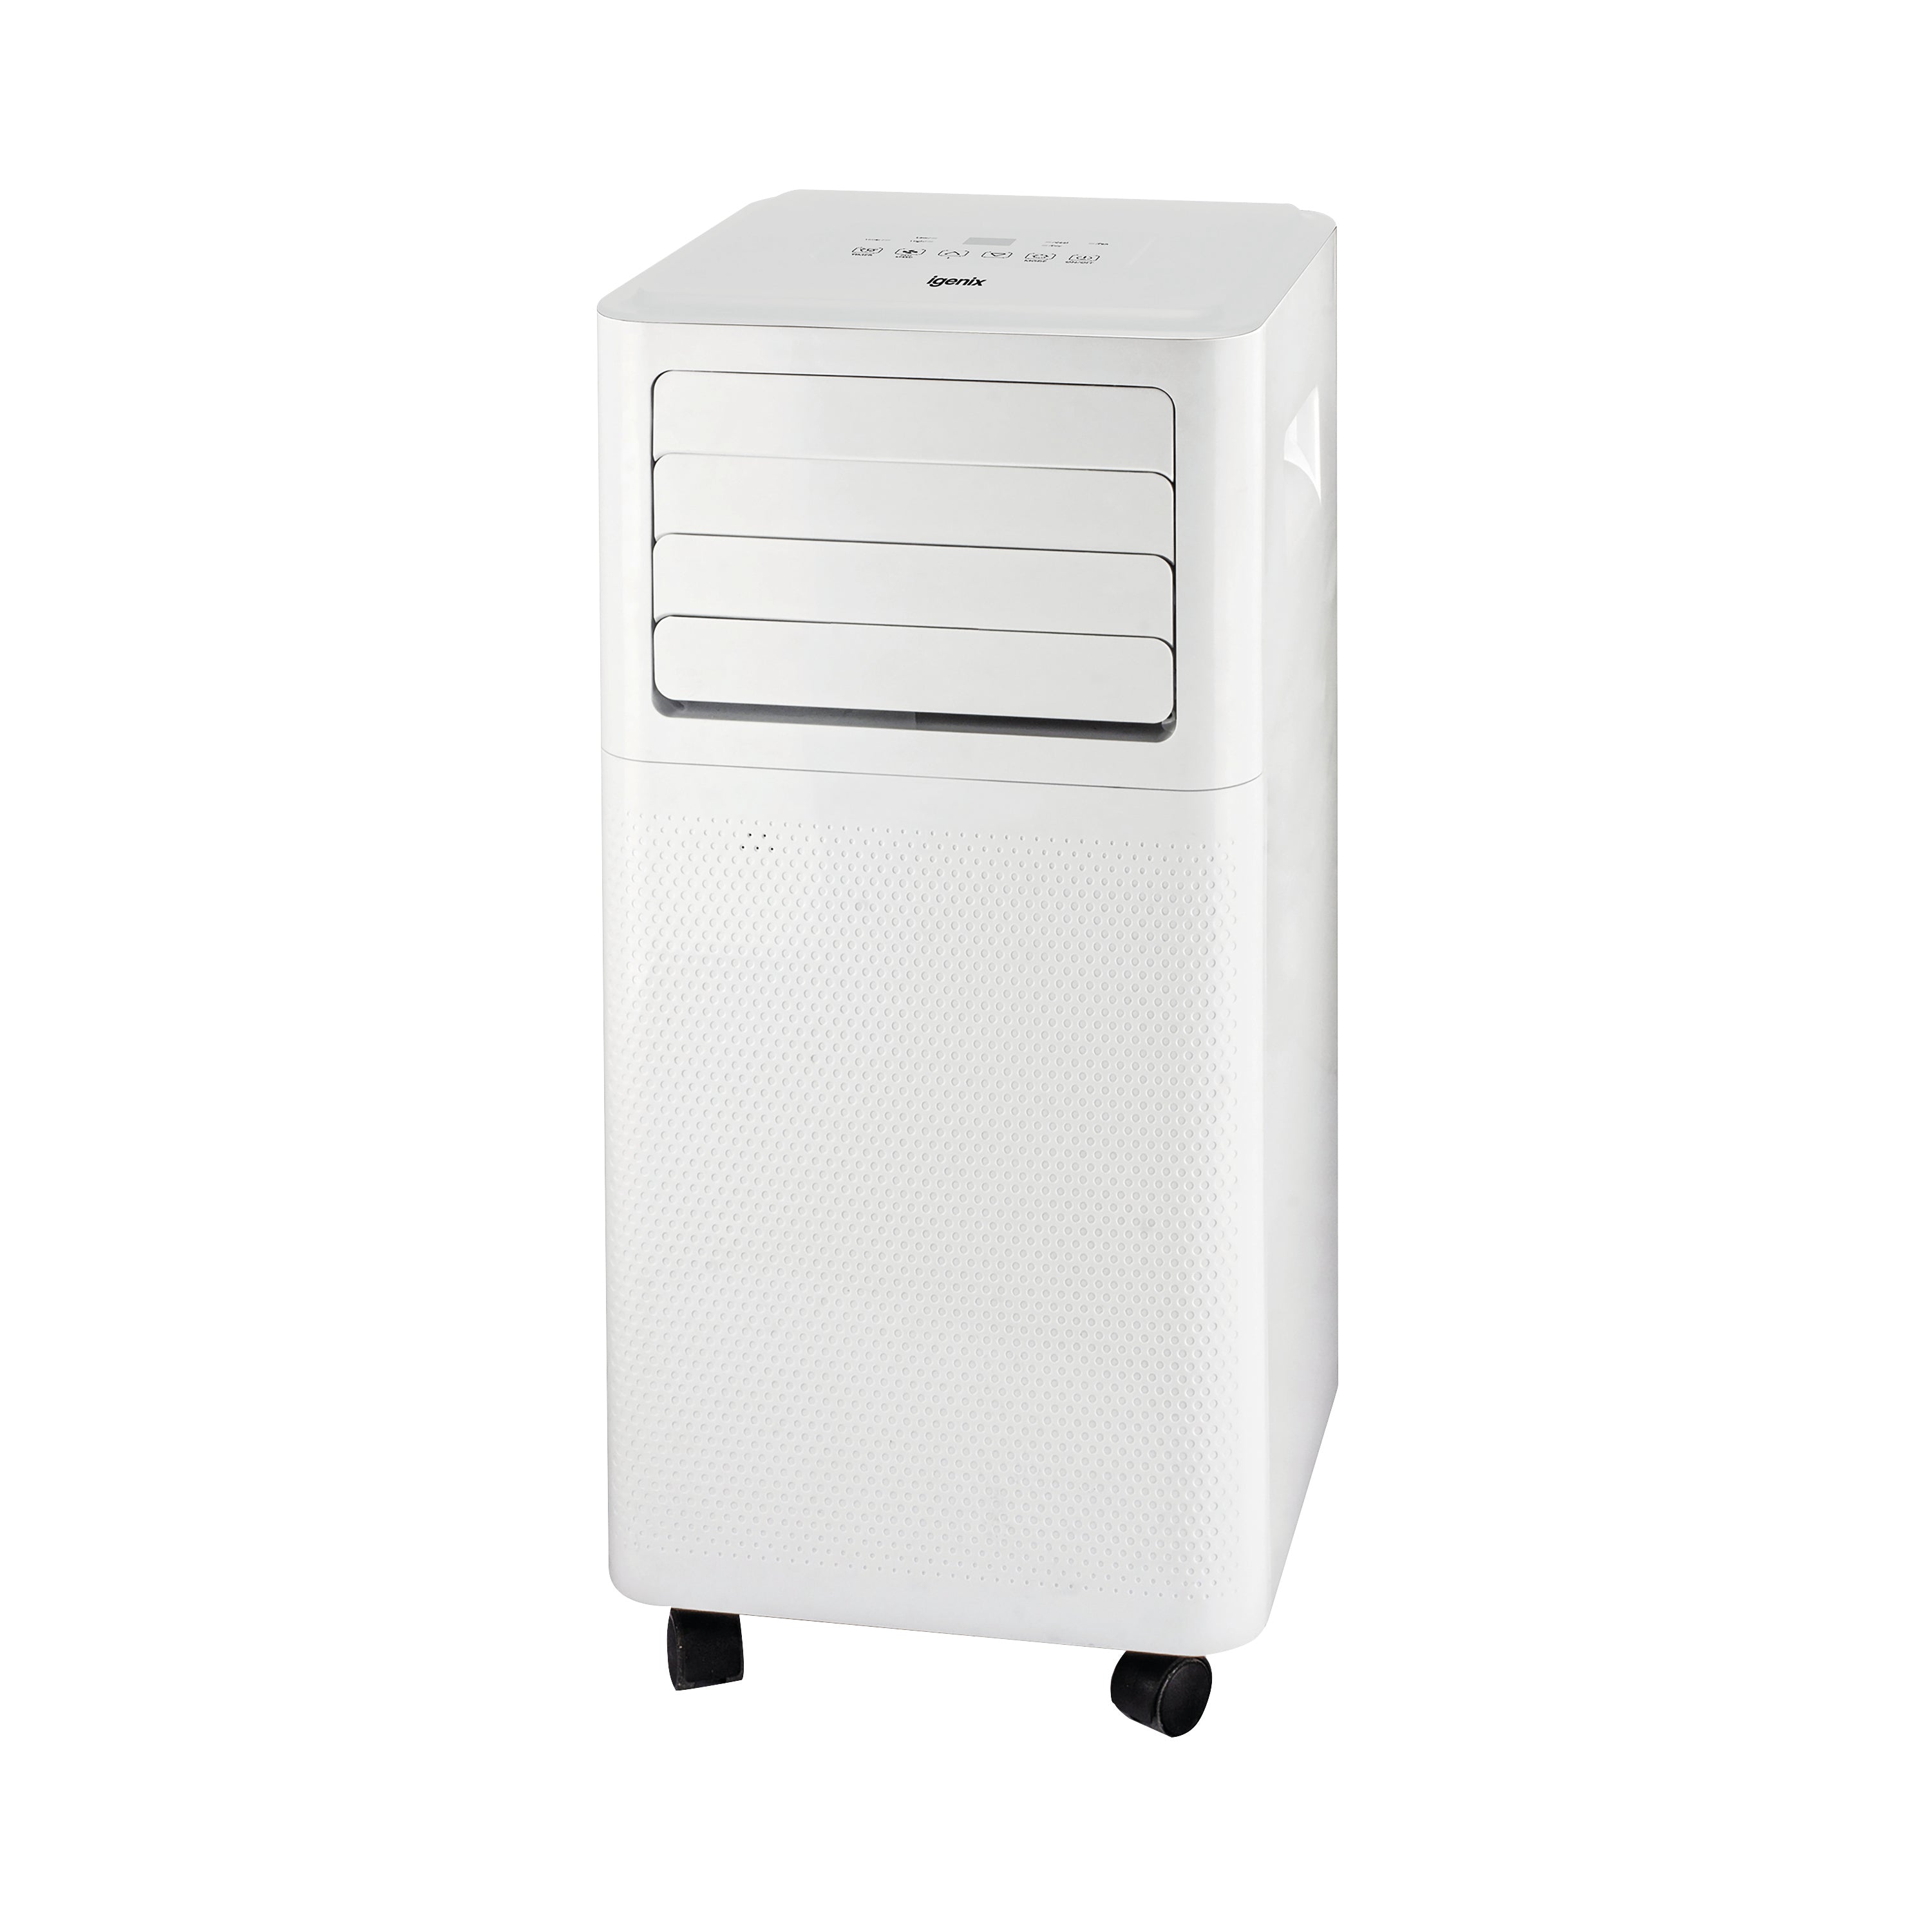 Igenix 9000 BTU 3-in-1 Portable Air Conditioner with Remote Control White IG9909